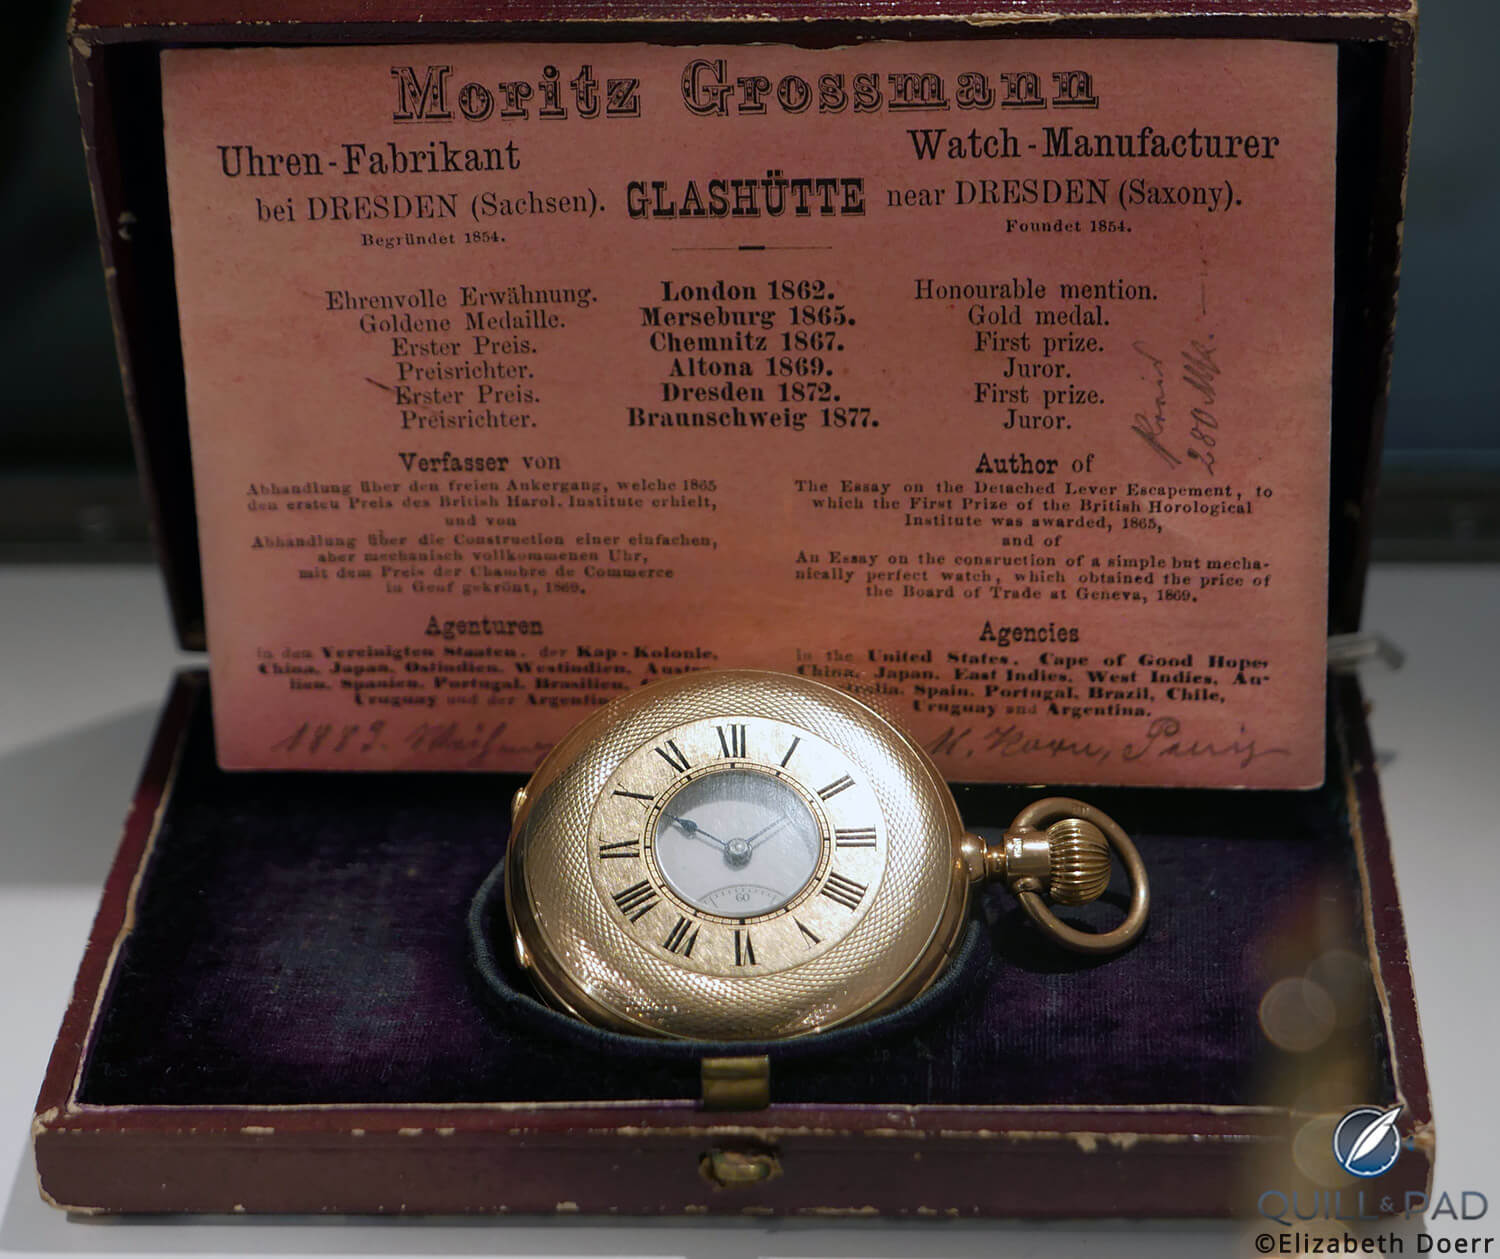 Moritz Grossmann pocket watch circa 1880 on display at the German Watchmaking Museum in Glashütte